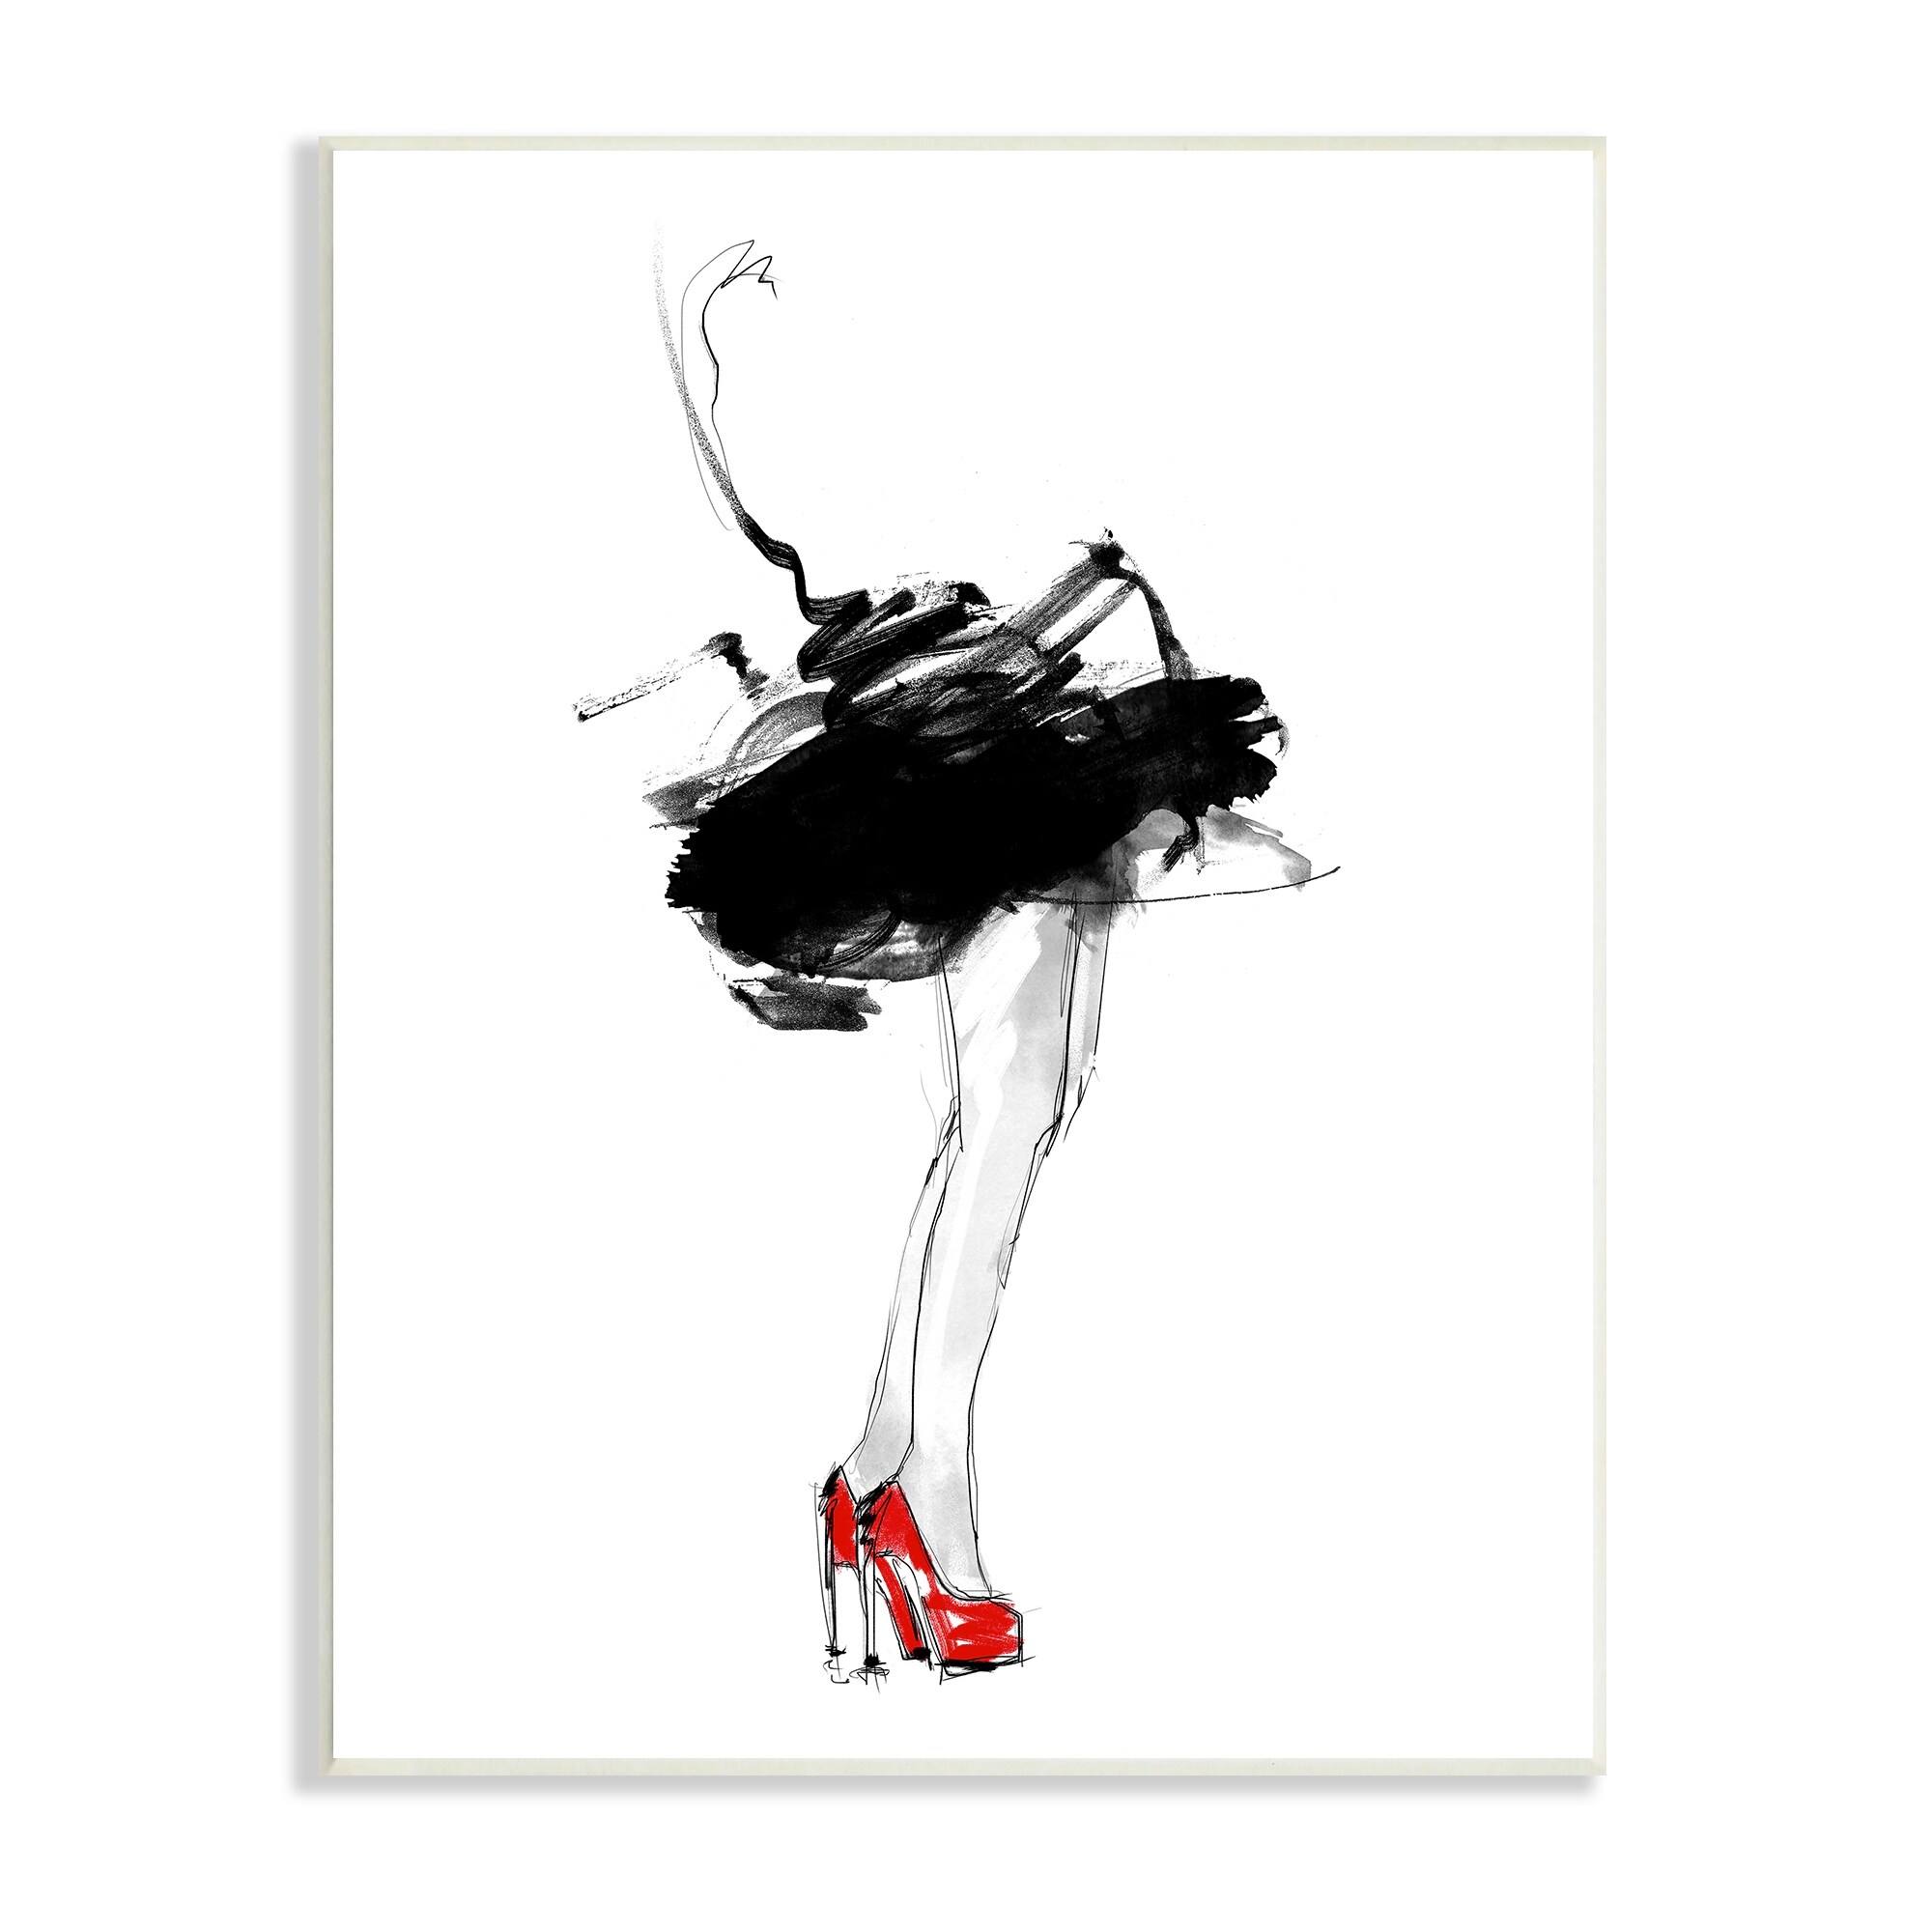 Stupell Red Bottom Heels Glam Fashion Bookstack Framed Wall Art - Black - 11 x 14